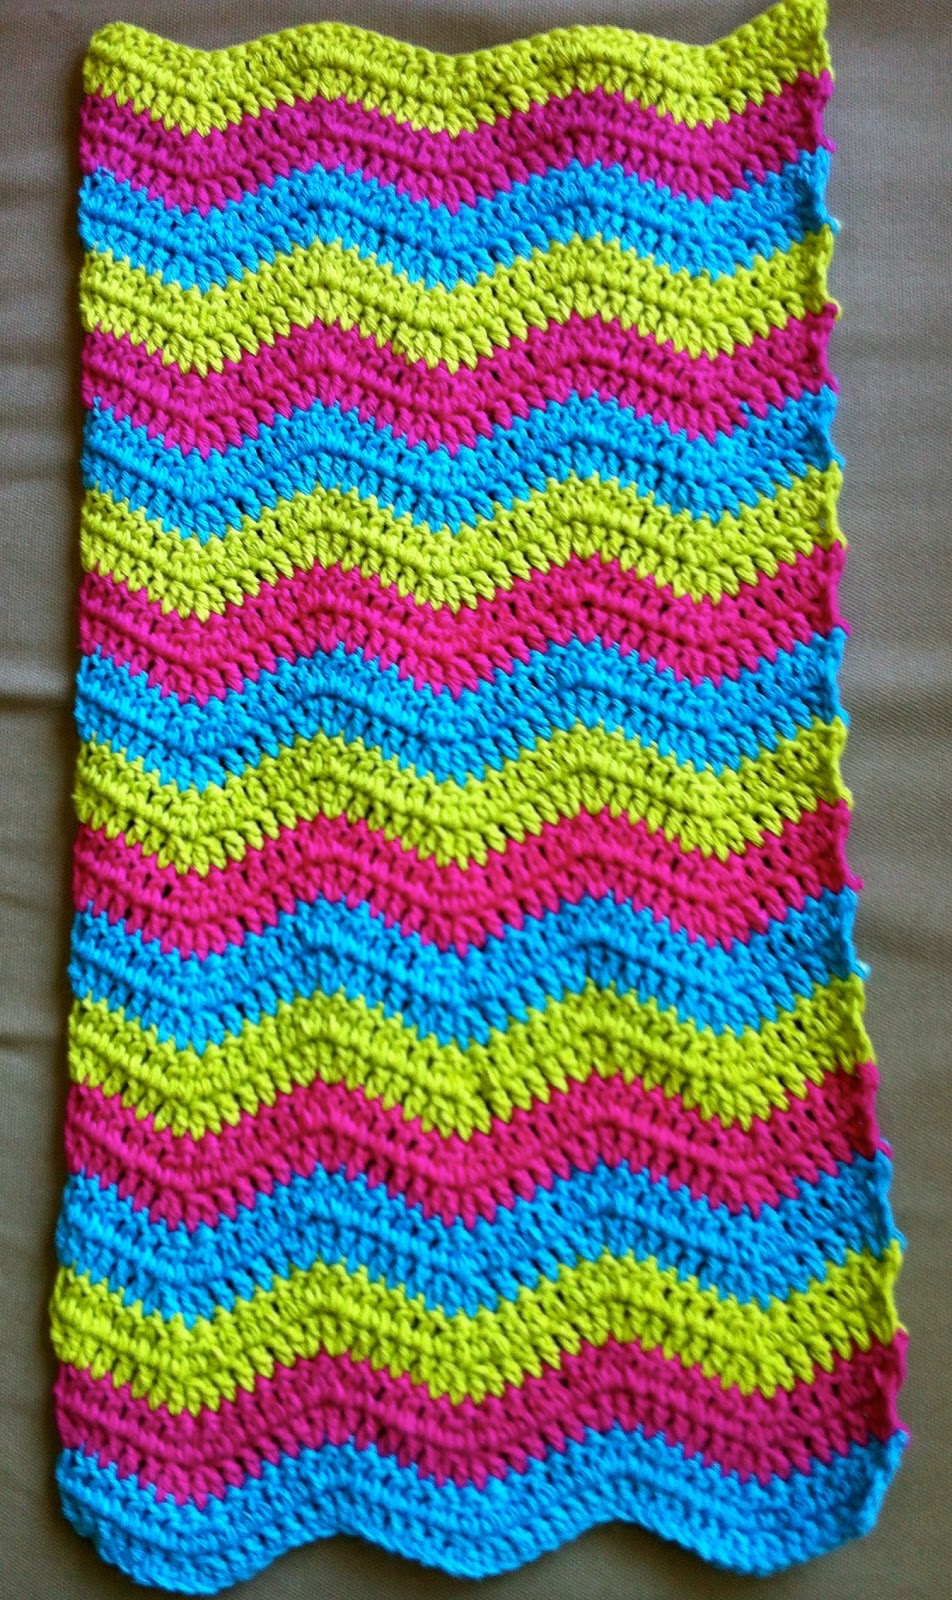 The Way I Crochet: Crochet Cotton Table Runner